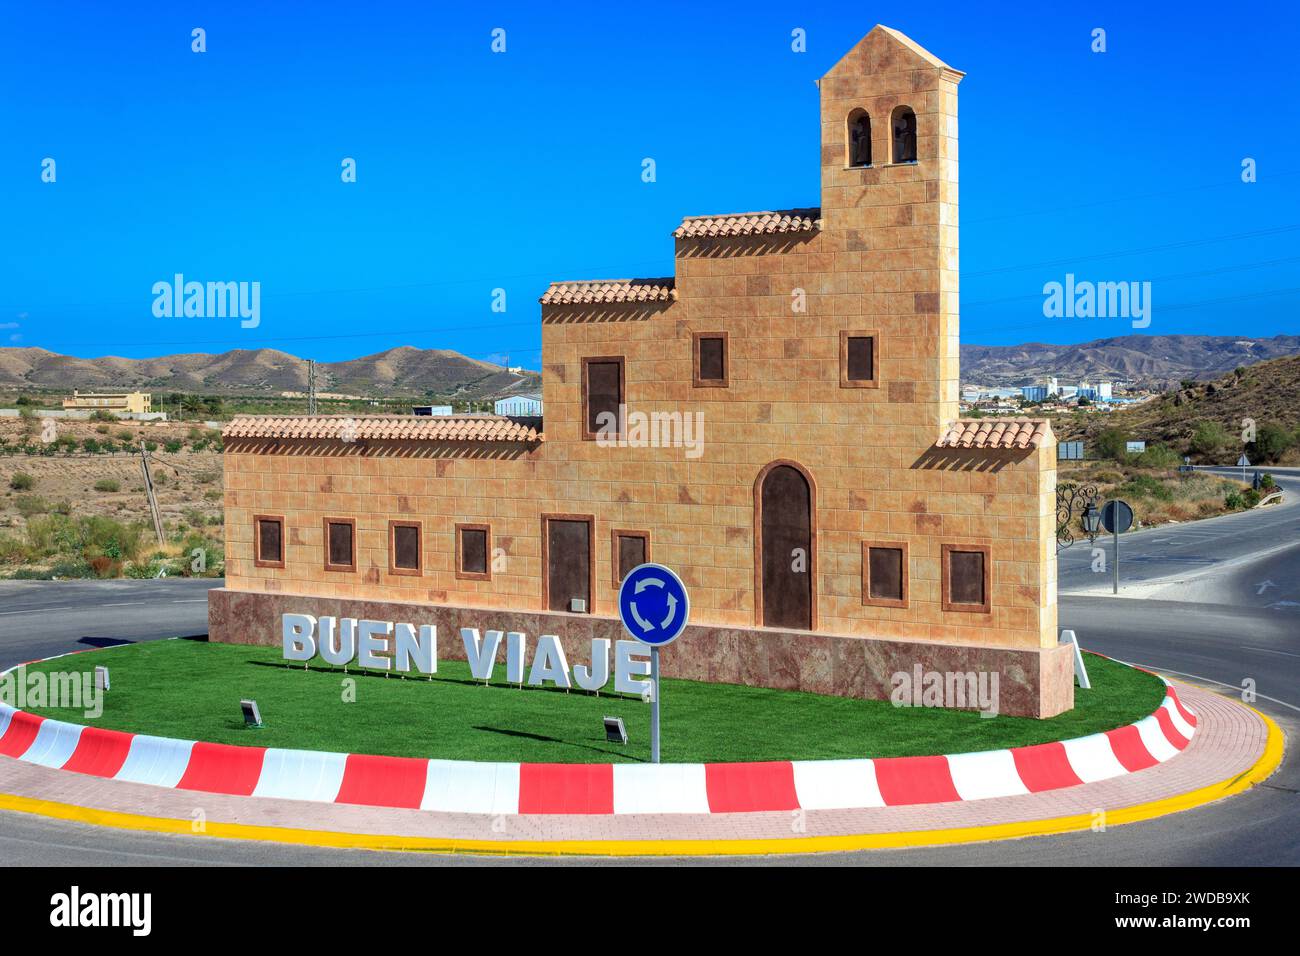 Roadside artwork, Spain Stock Photo